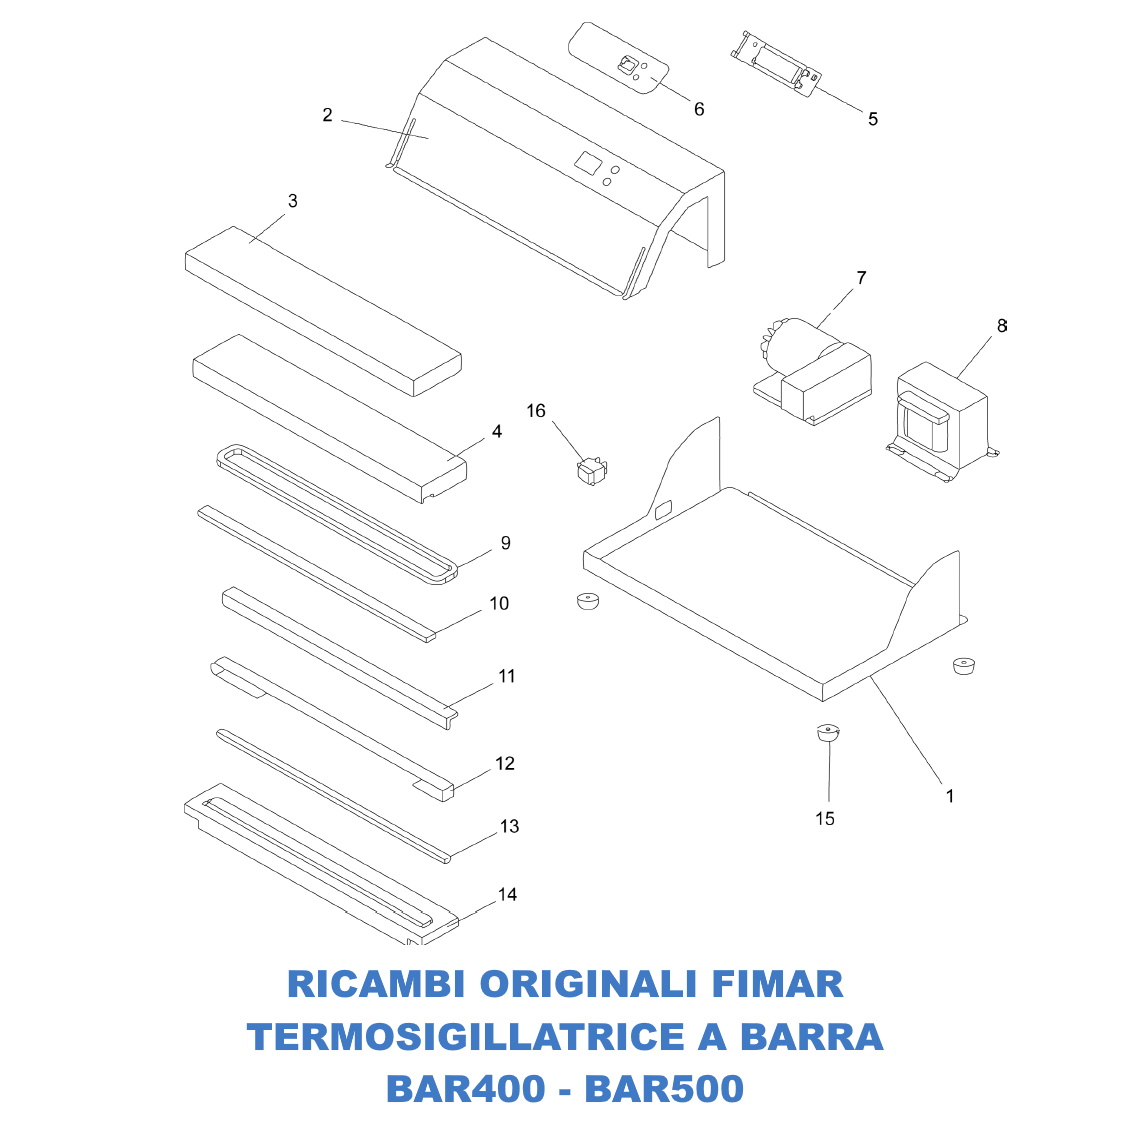 Esploso ricambi per termosigillatrice a barra Fimar modelli BAR400 - BAR500